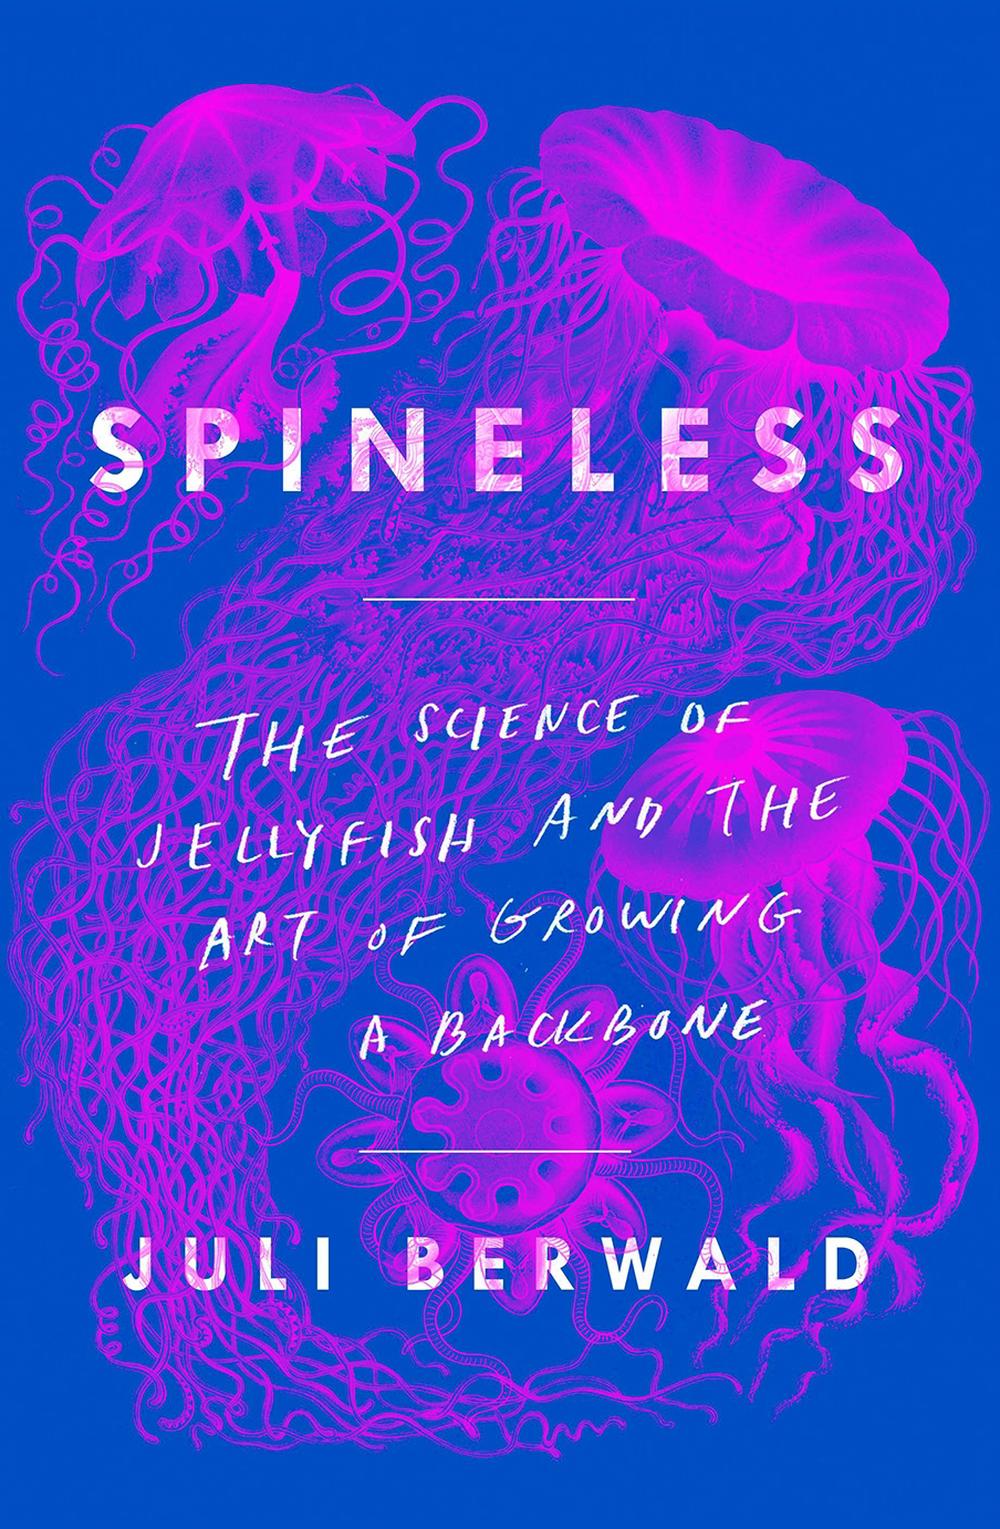 Spineless by Juli Berwald